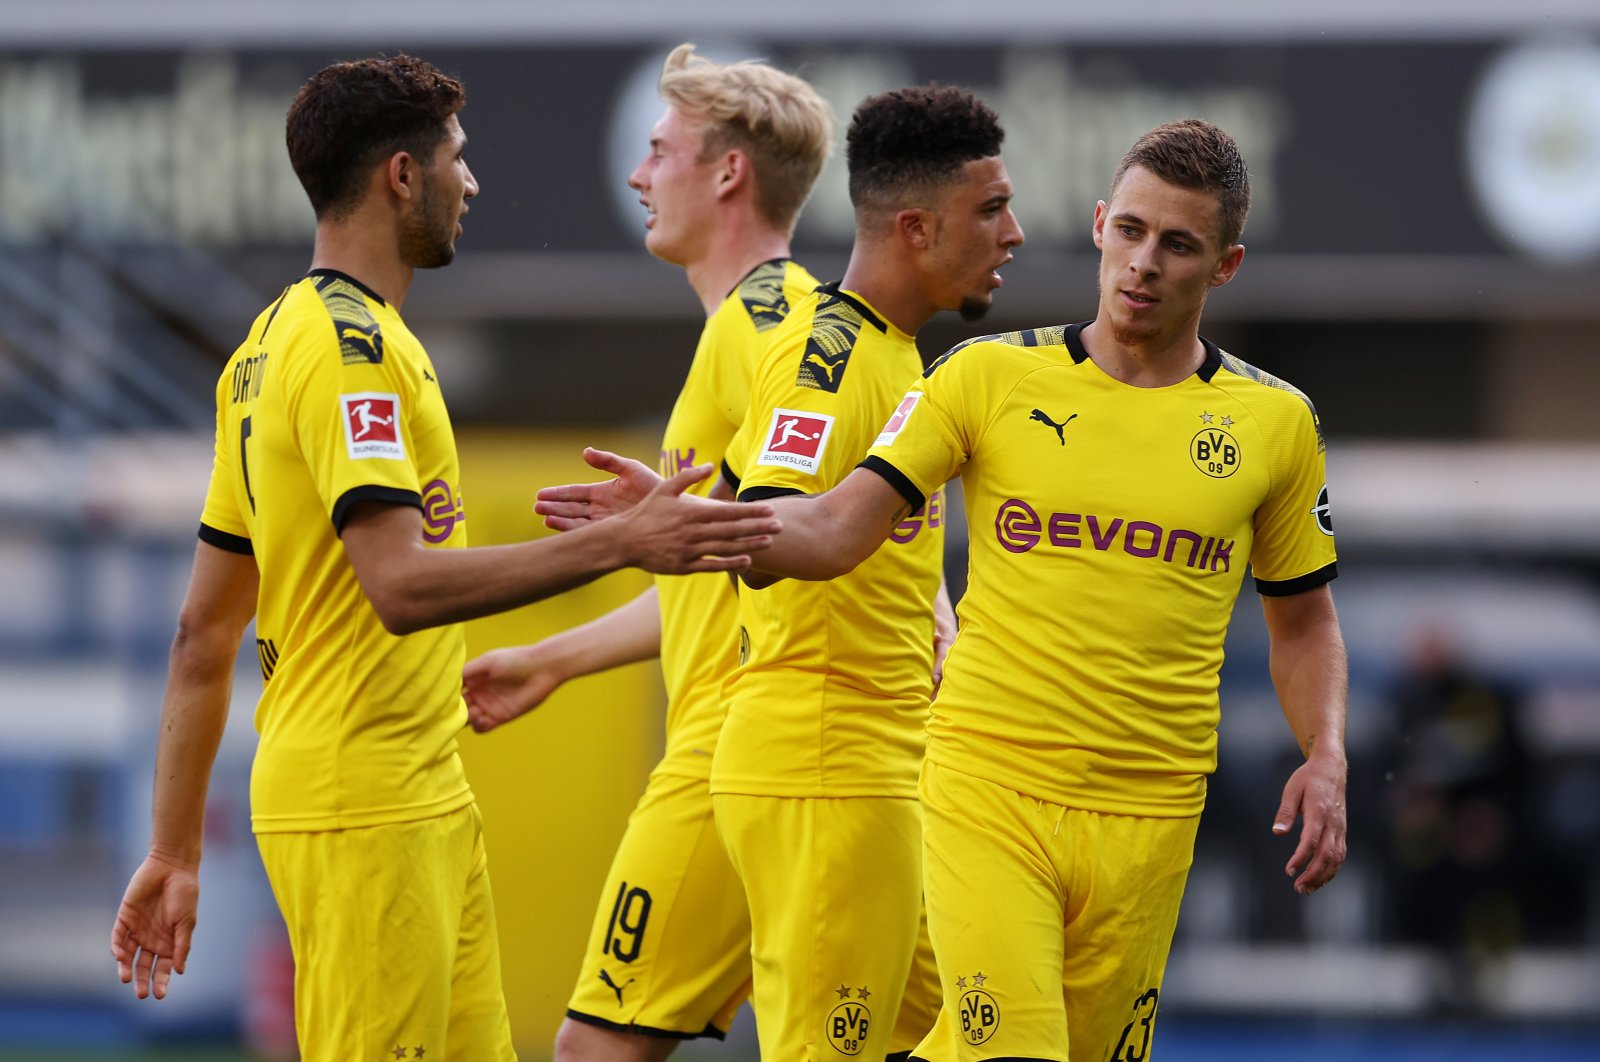 Thorgan Hazard (R) of Borussia Dortmund celebrates with teammates, scoring the 1-0 lead during a match against SC Paderborn 07, Paderborn, Germany, May 31, 2020. (EPA Photo)